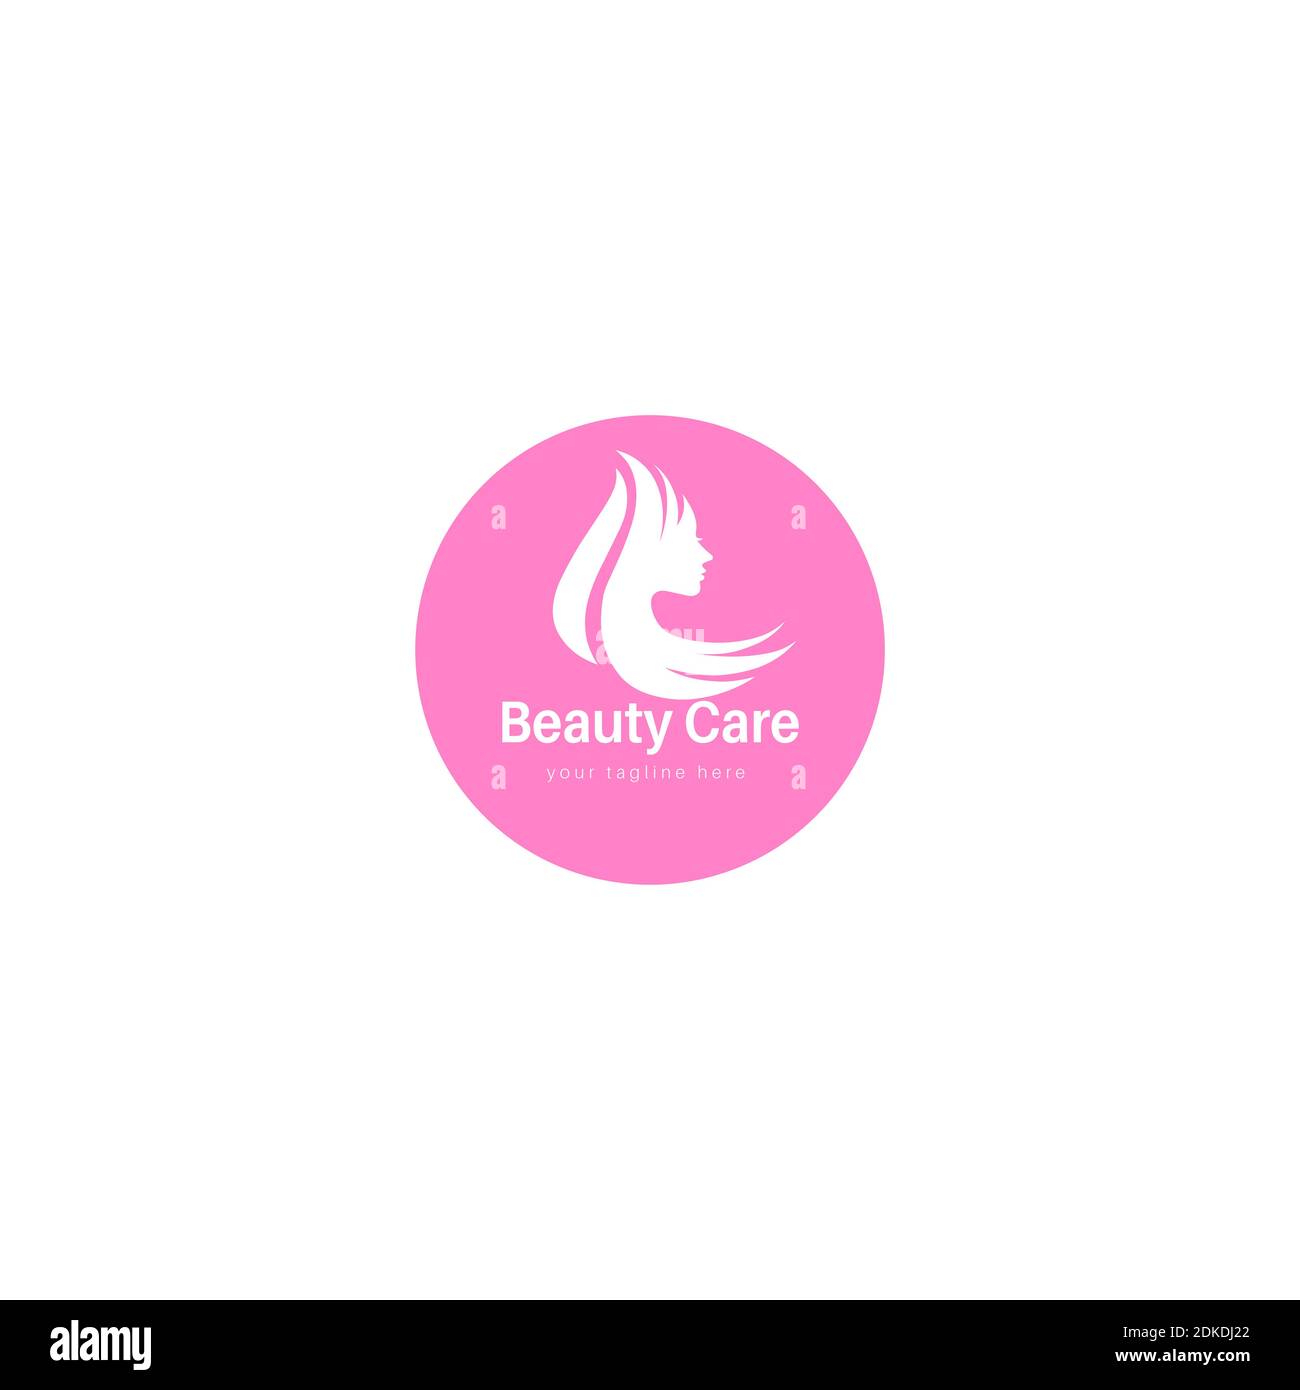 Beauty brand and beauty hair logo Stock Vector Image & Art - Alamy